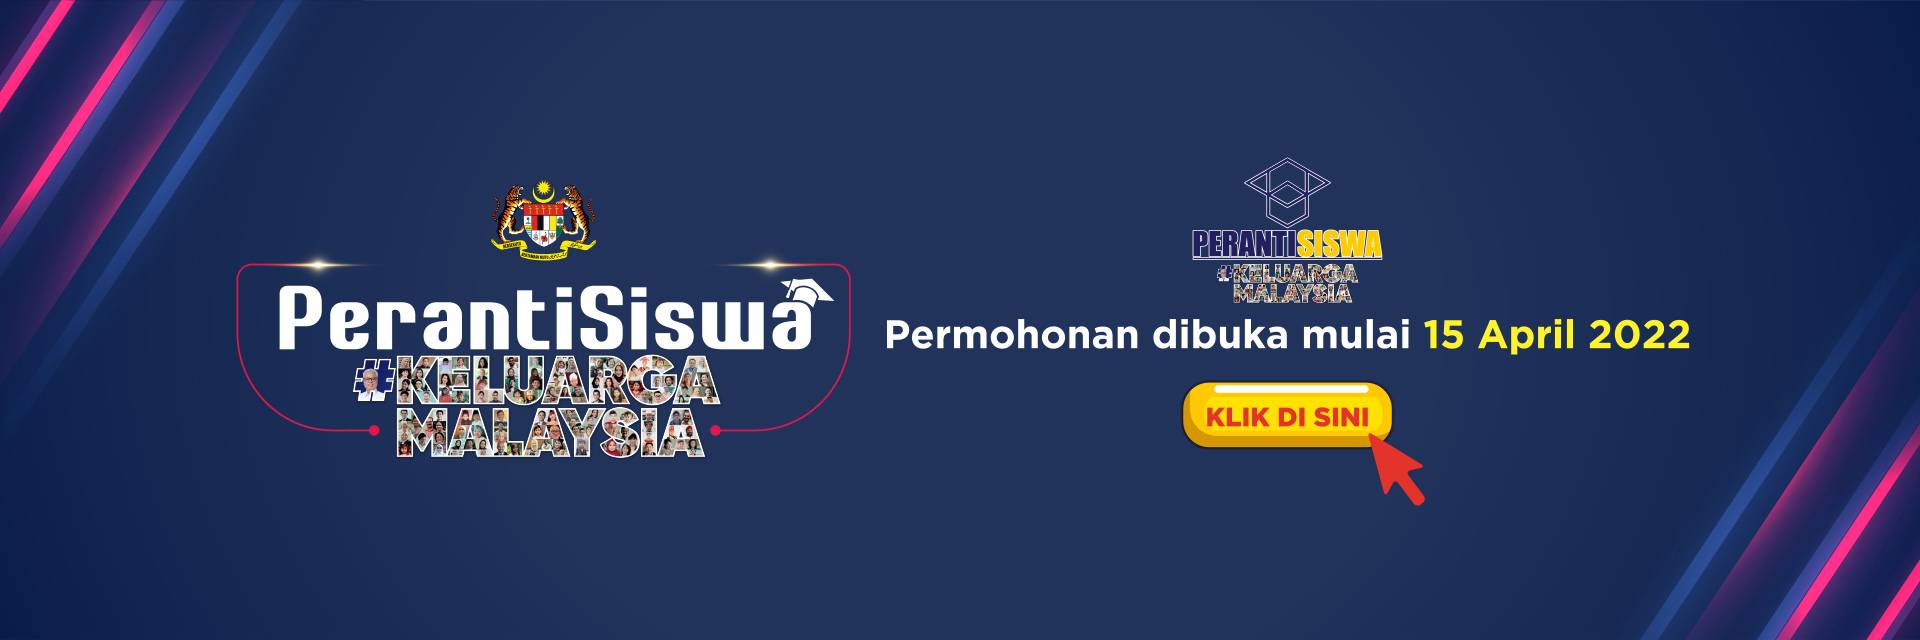 PerantiSiswa Web Banner